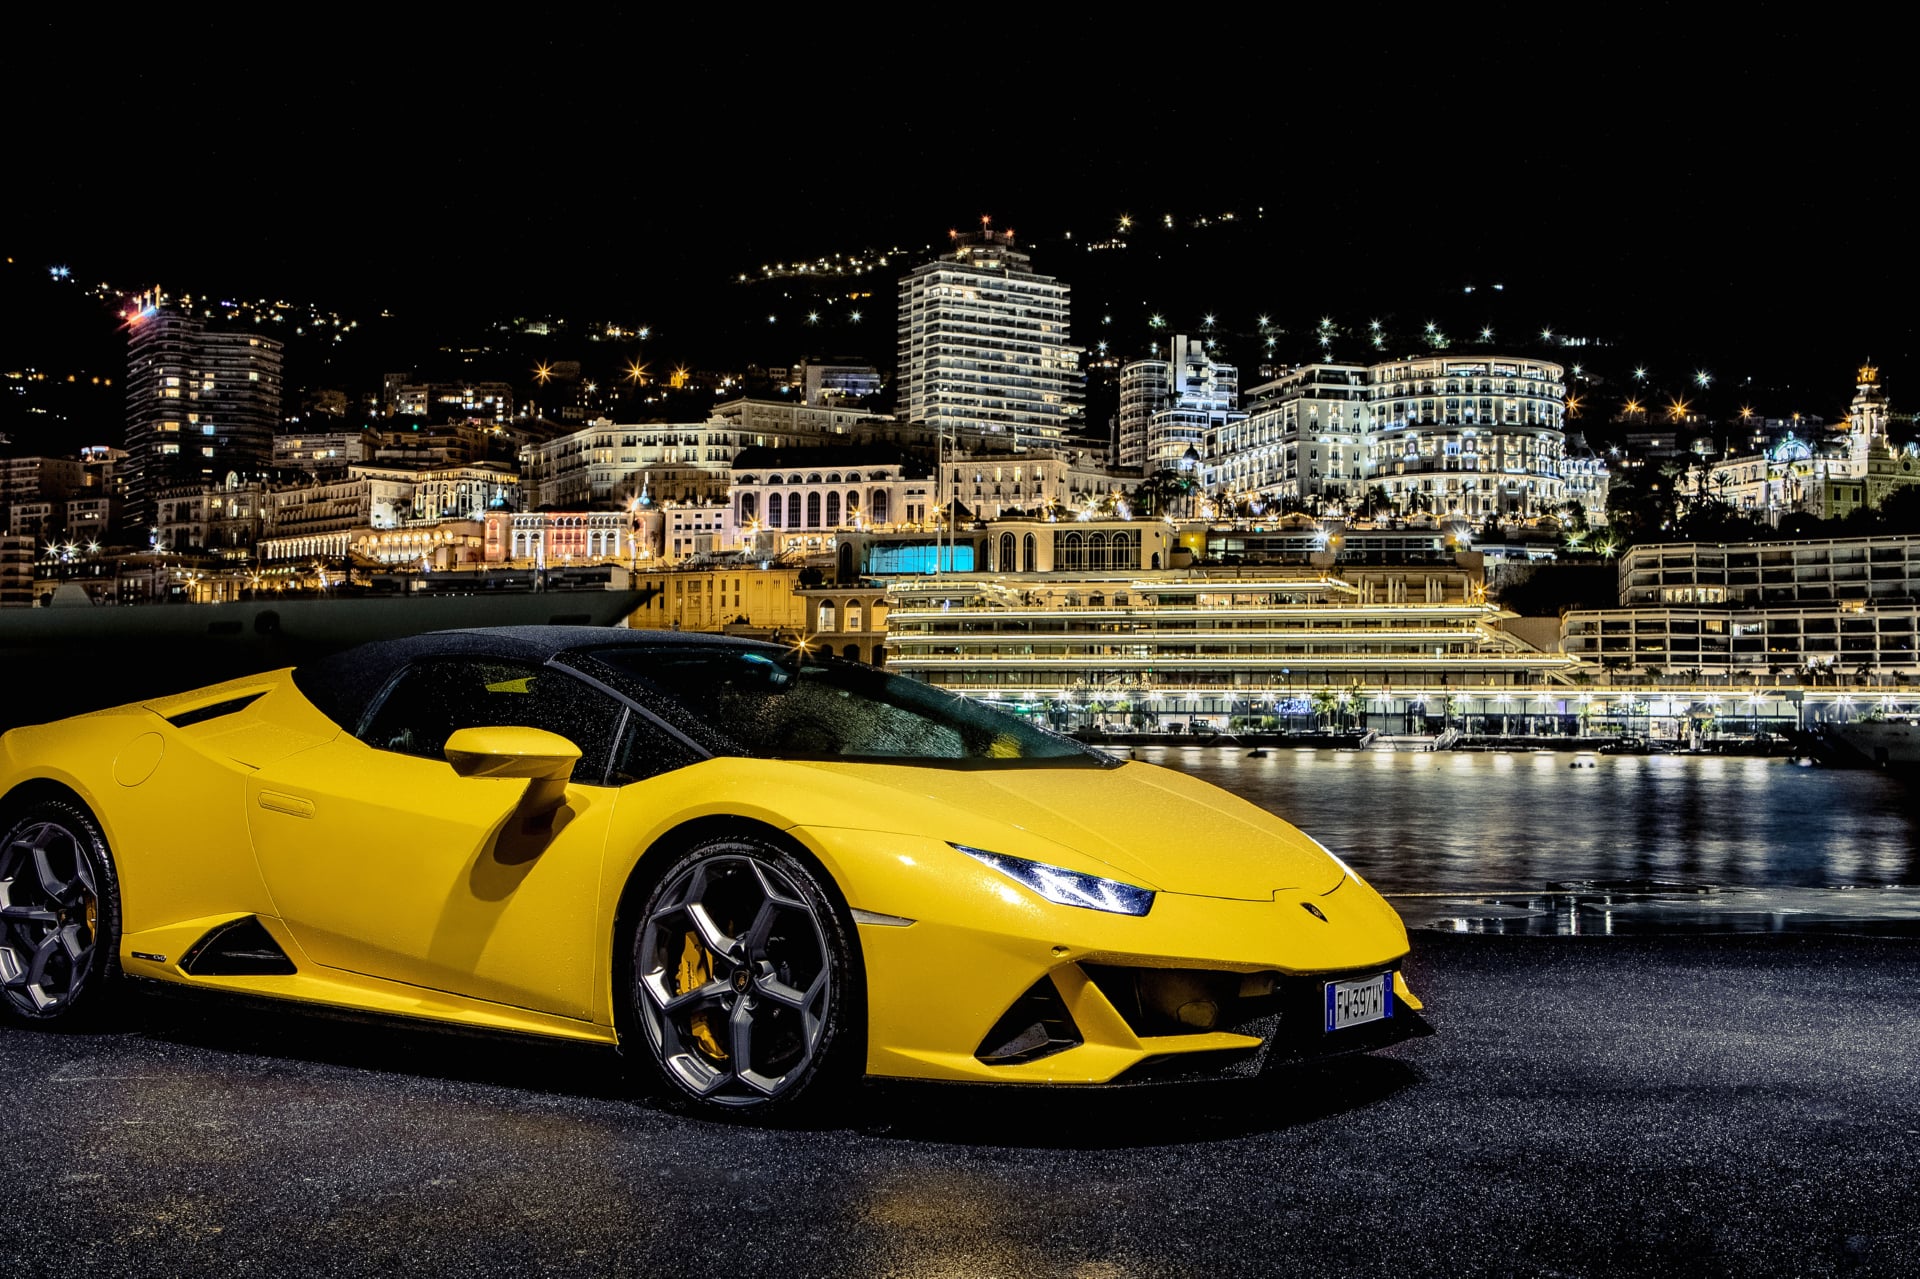 Lamborghini Huracan EVO Spyder at 1600 x 1200 size wallpapers HD quality